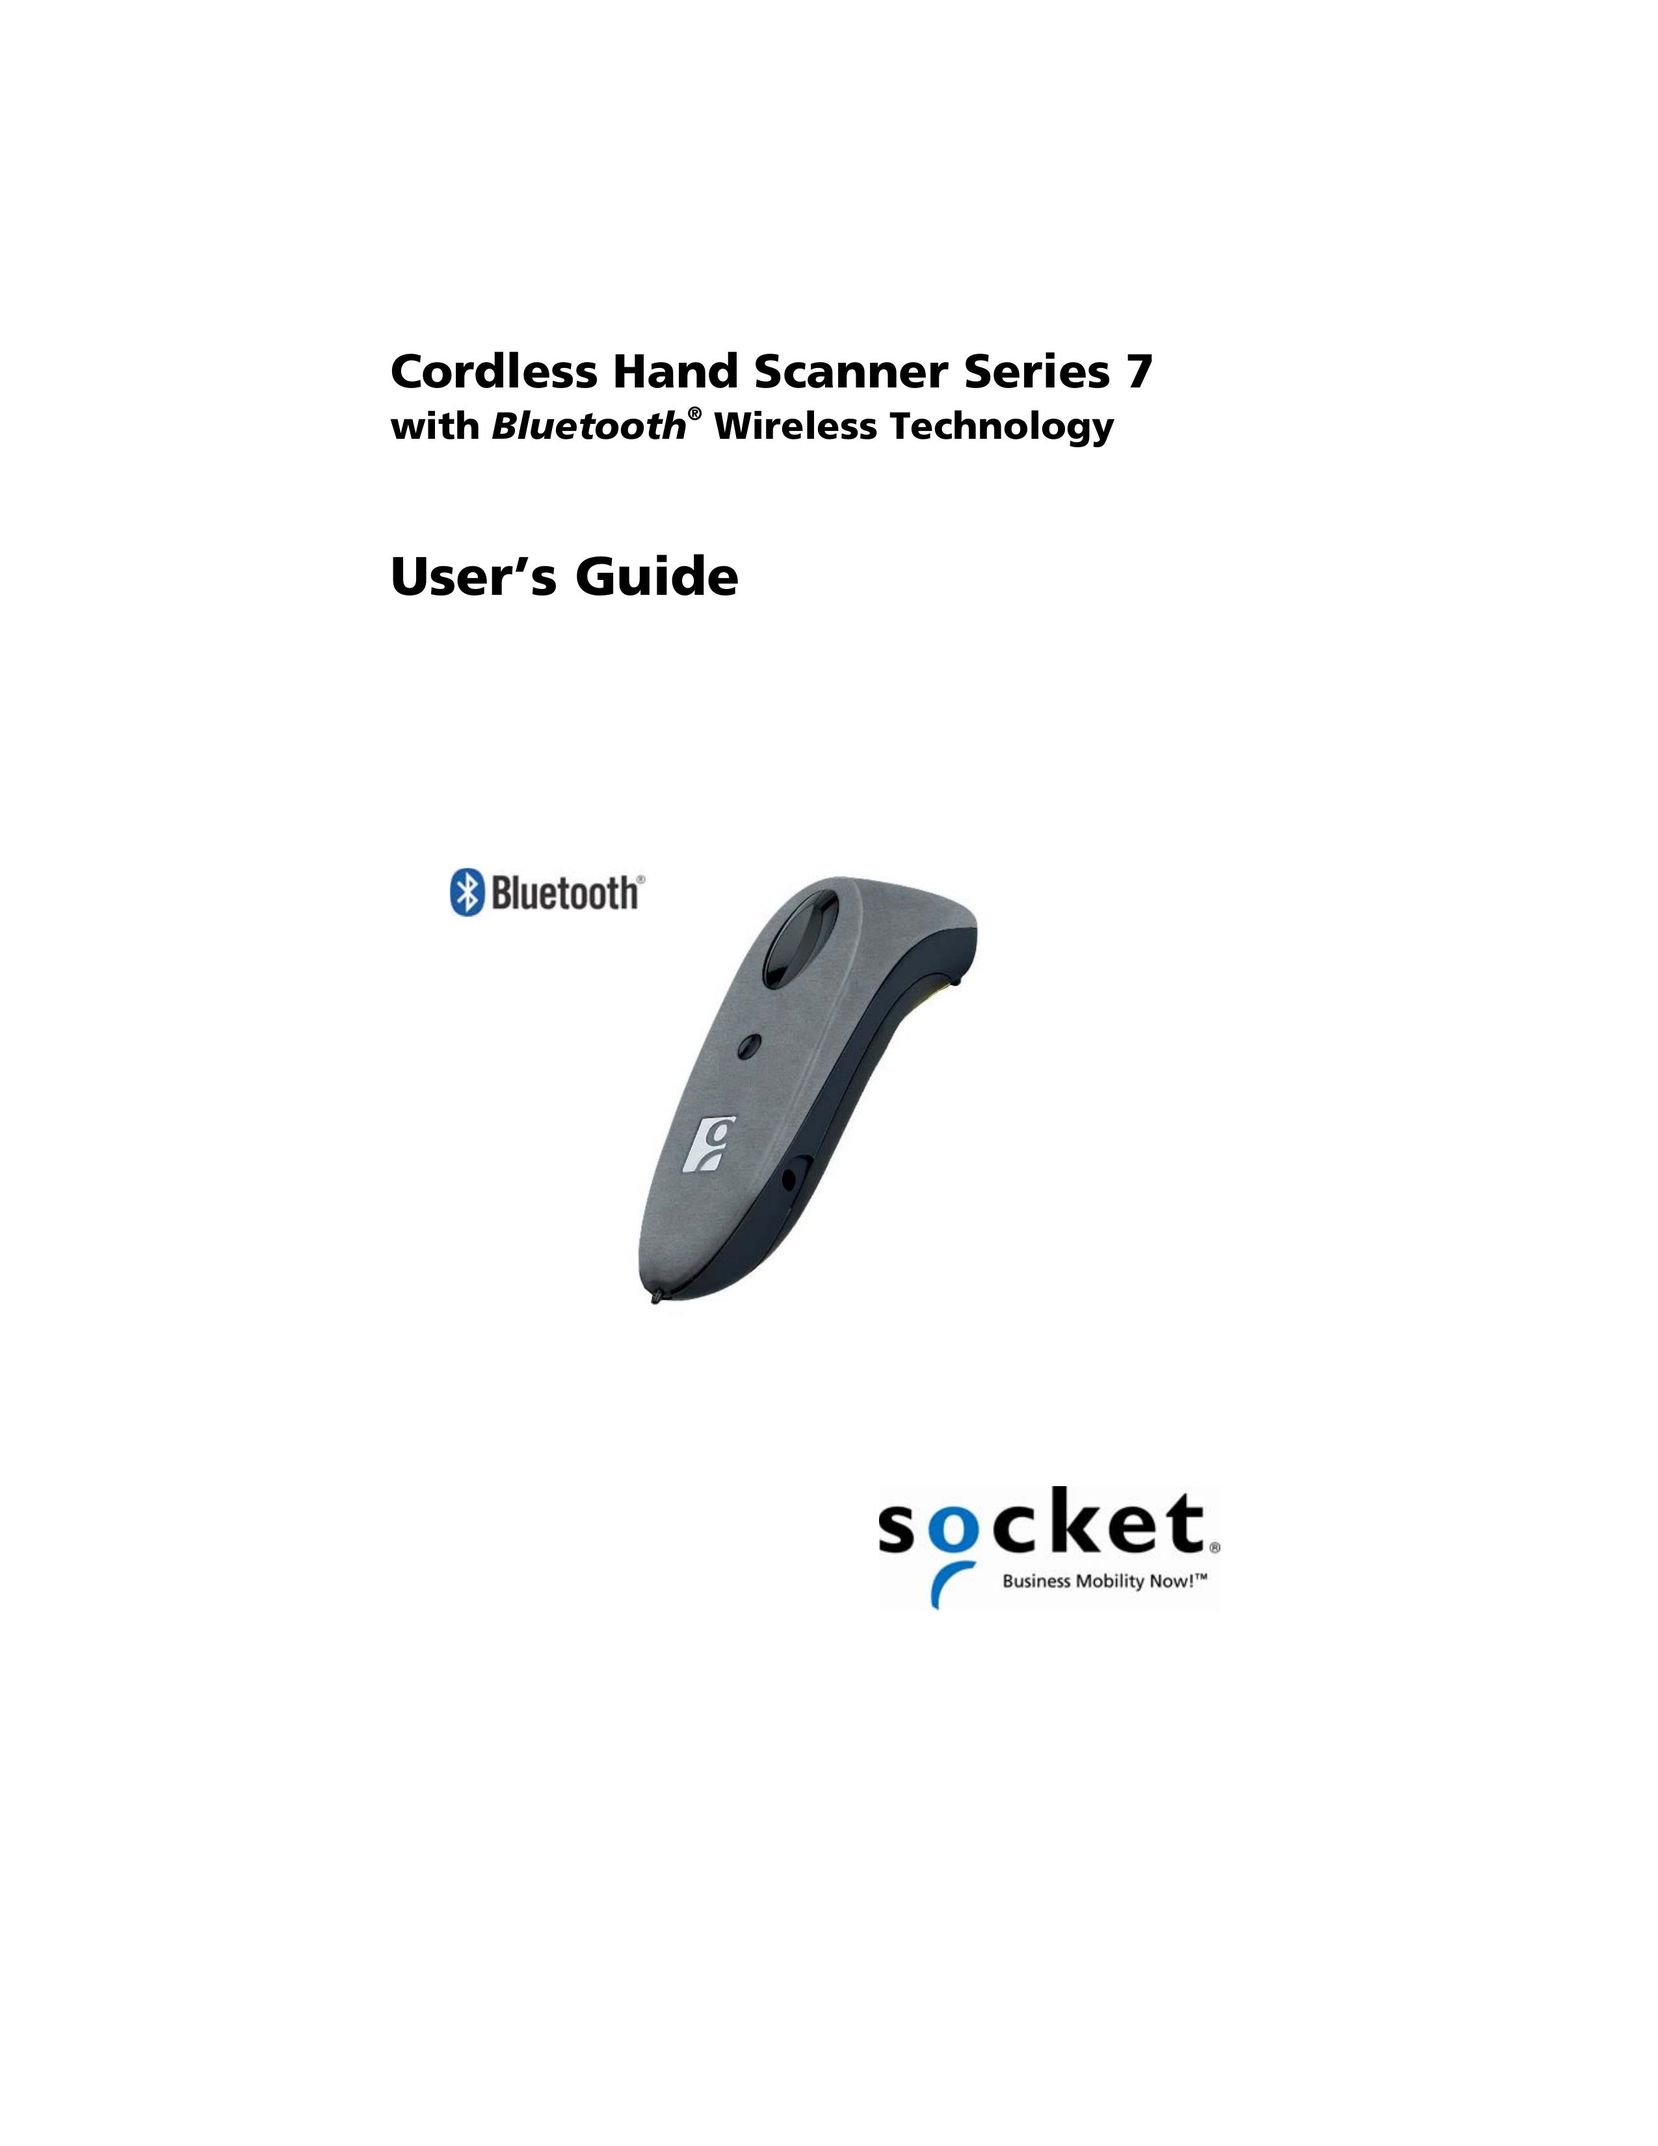 Socket Mobile iPAQ Scanner User Manual